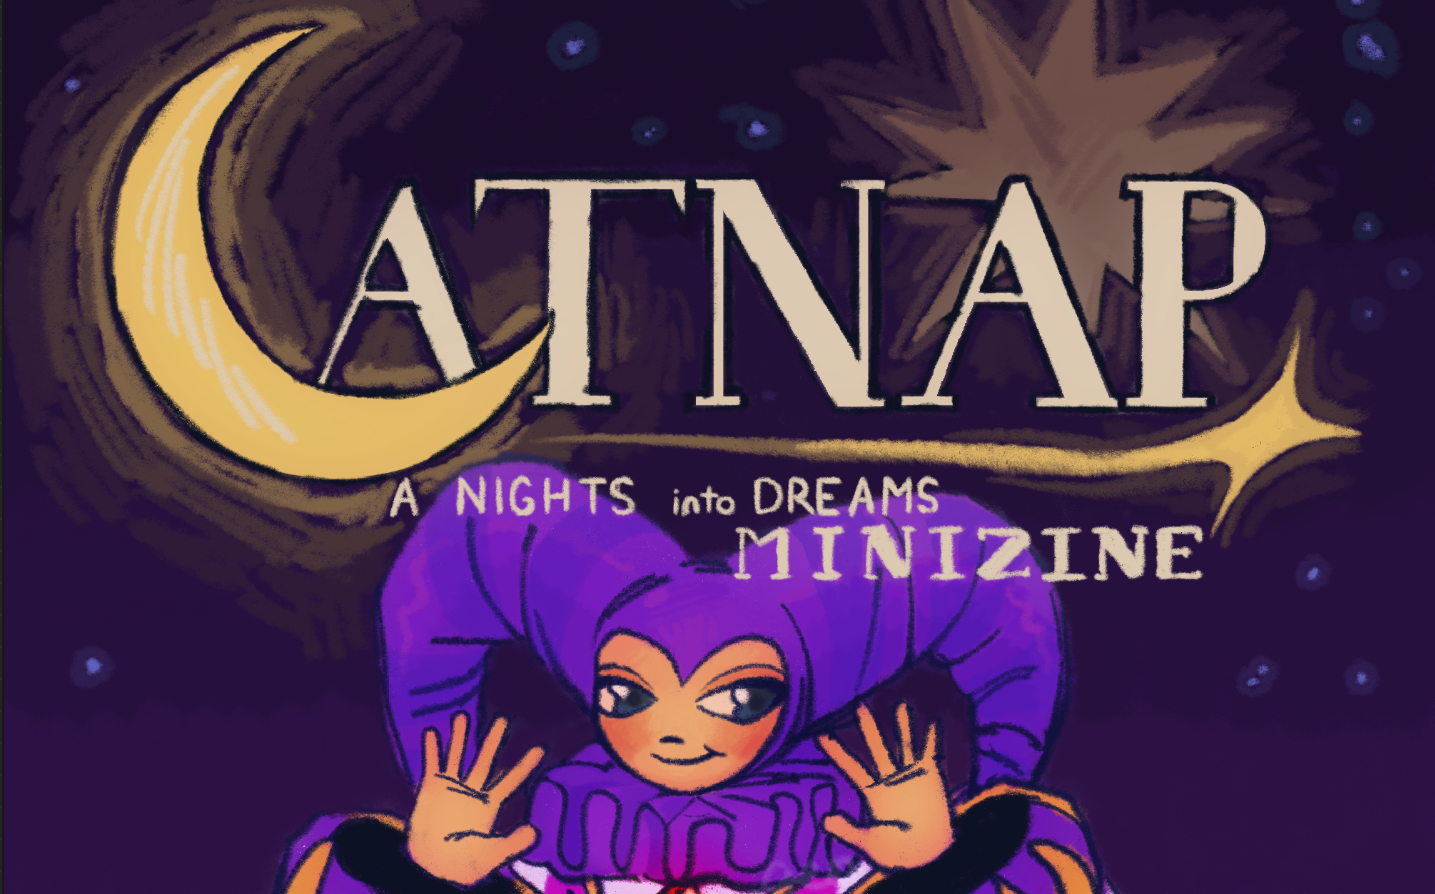 CATNAP: A NiGHTS into Dreams Minizine